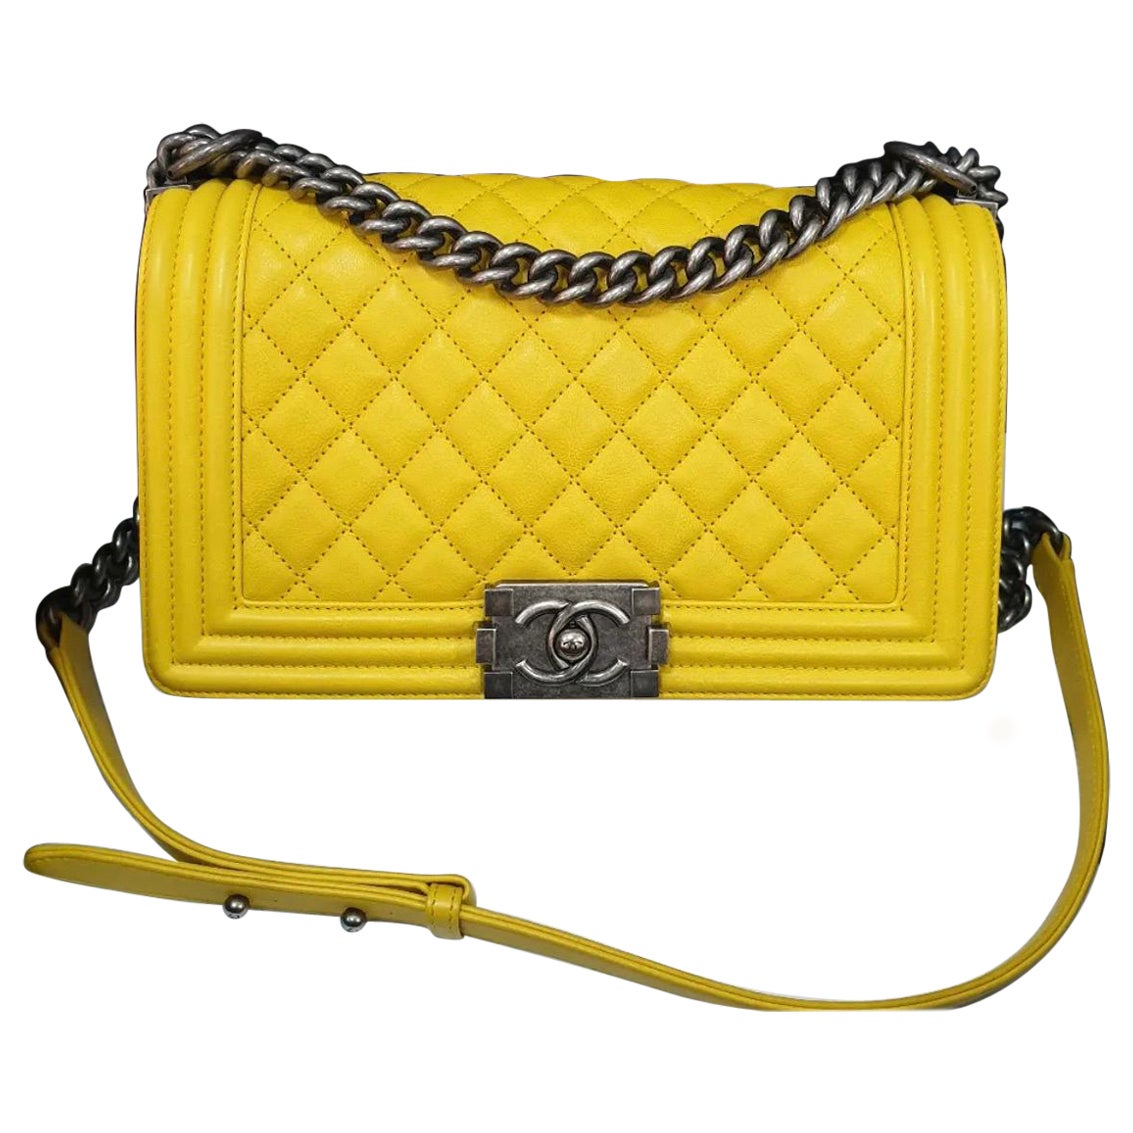 Chanel Yellow Leather  Medium Boy Bag